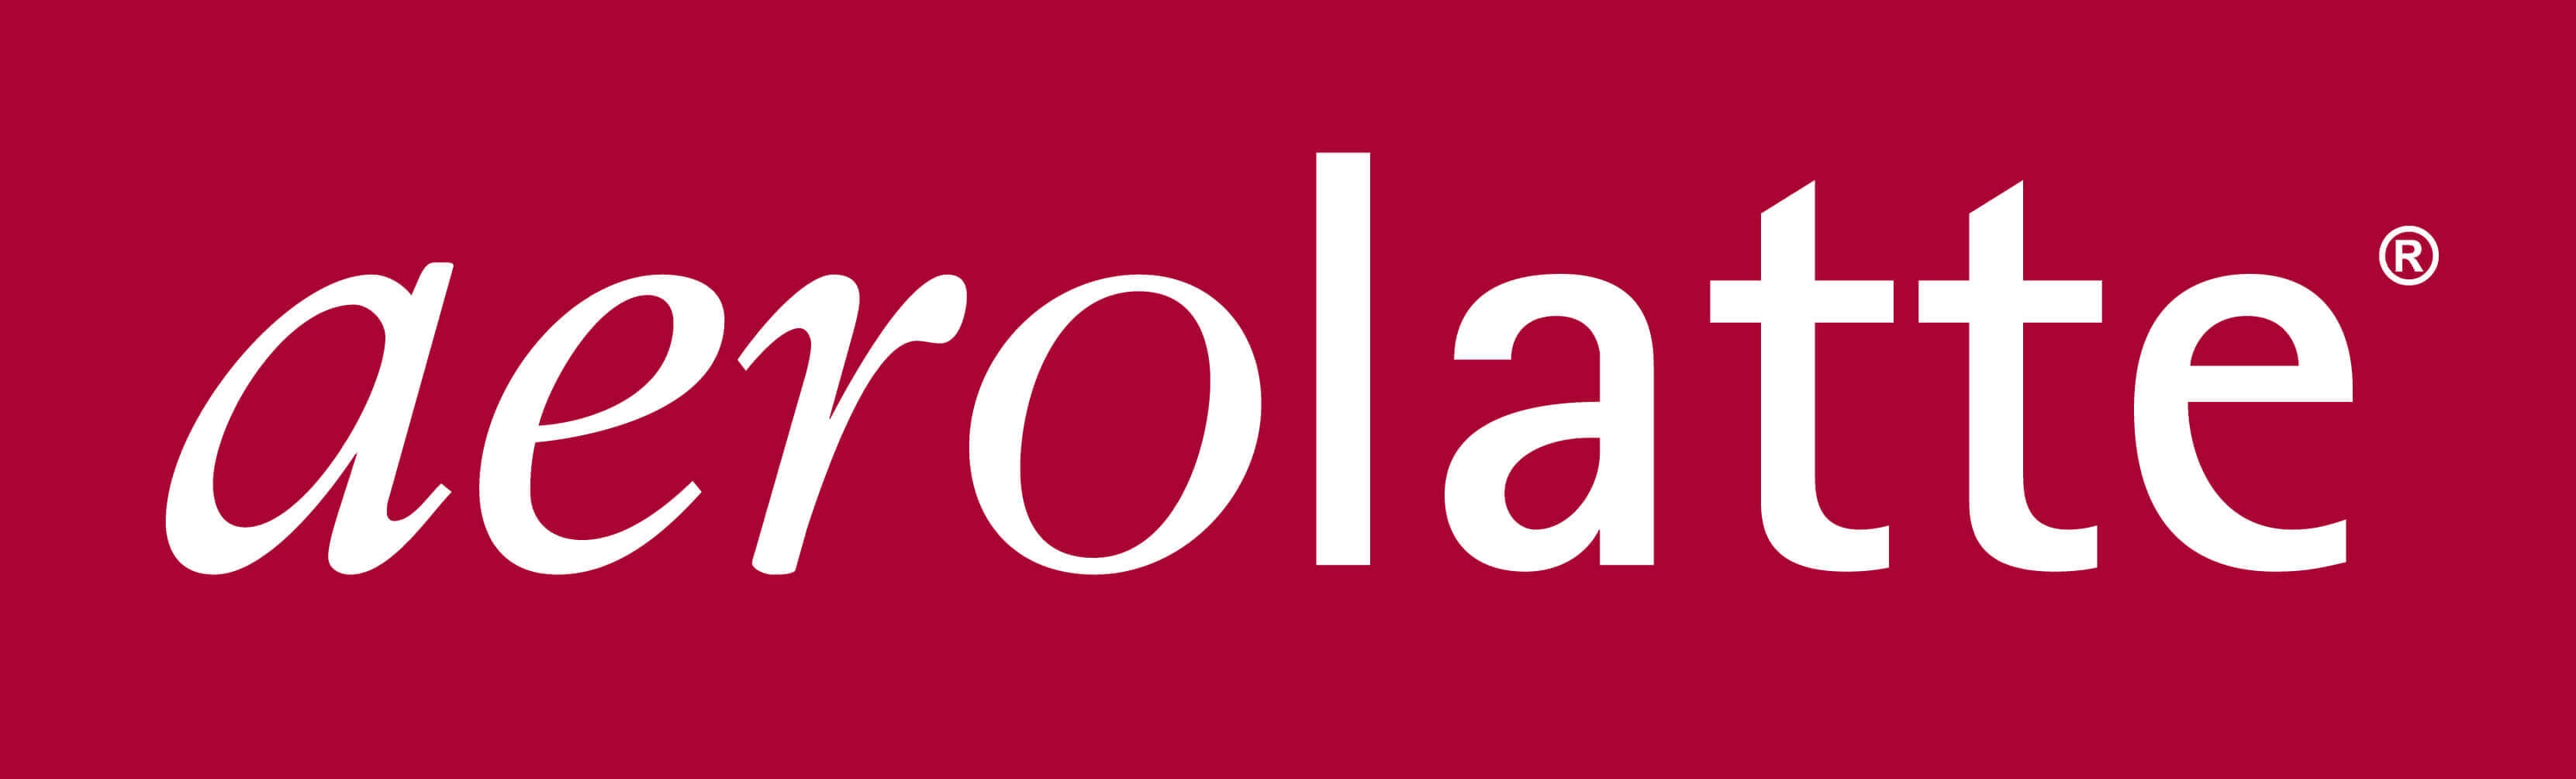 Aerolatte logo